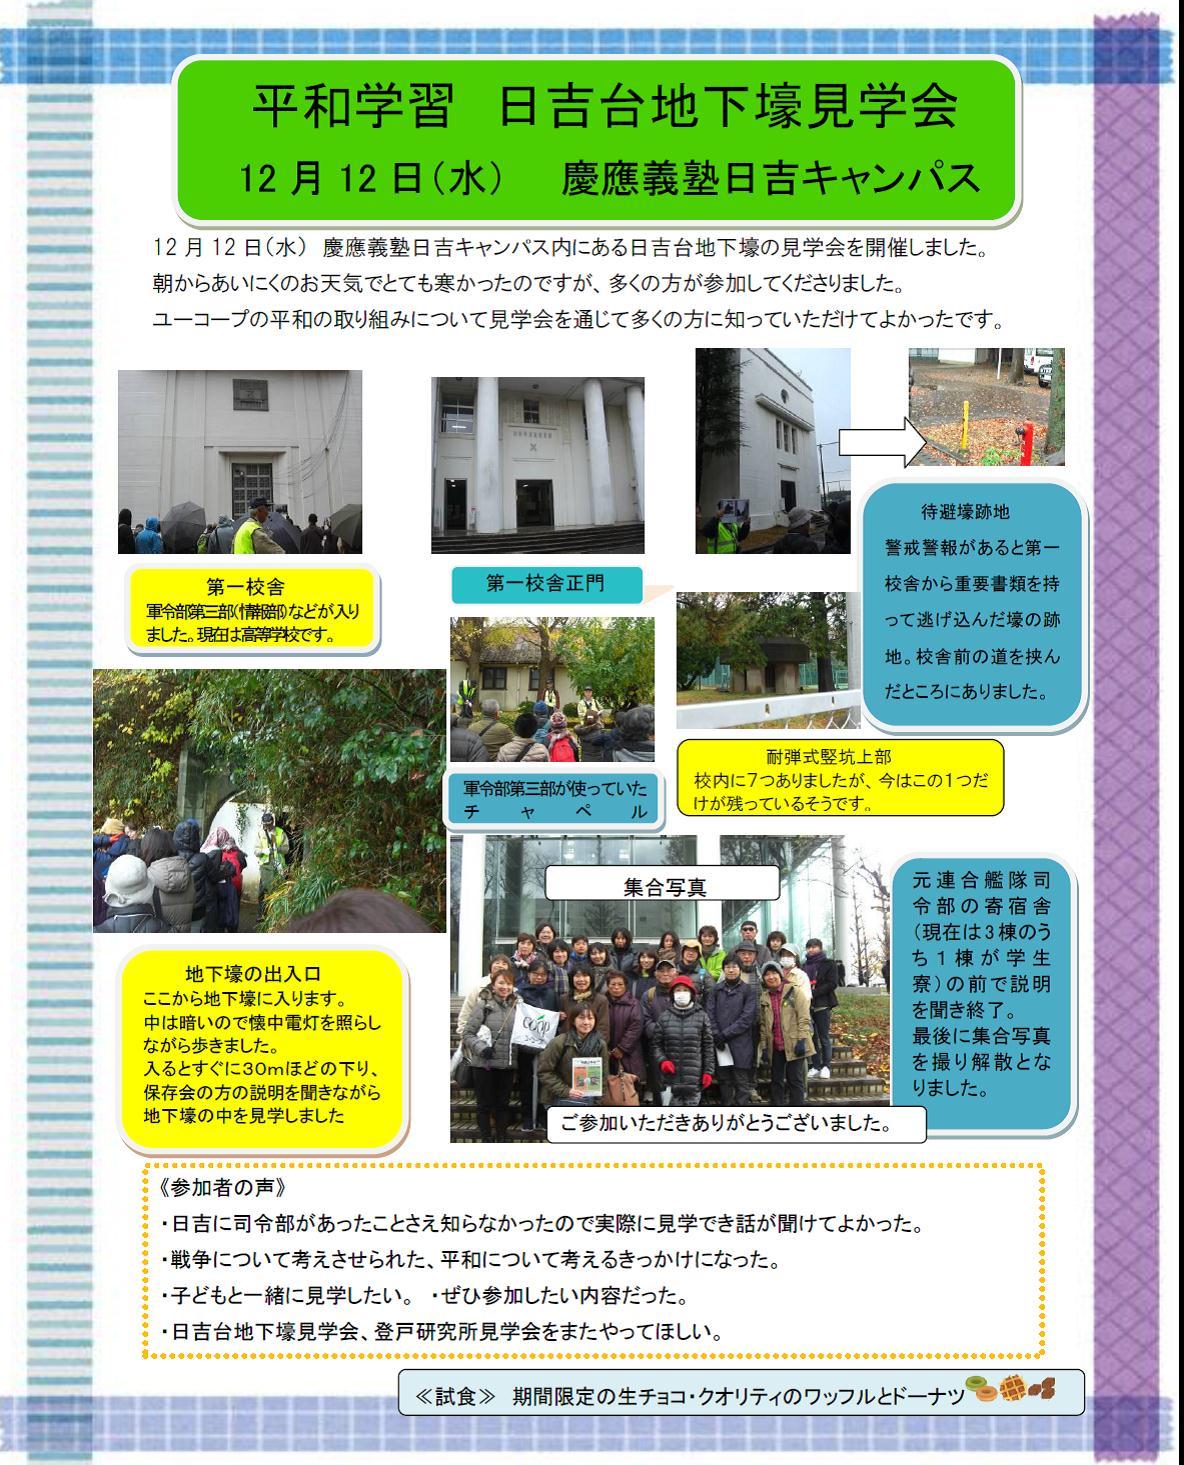 http://kanagawa.ucoop.or.jp/hiroba/areanews/files/20181212kawasaki2hiyoshi.jpg